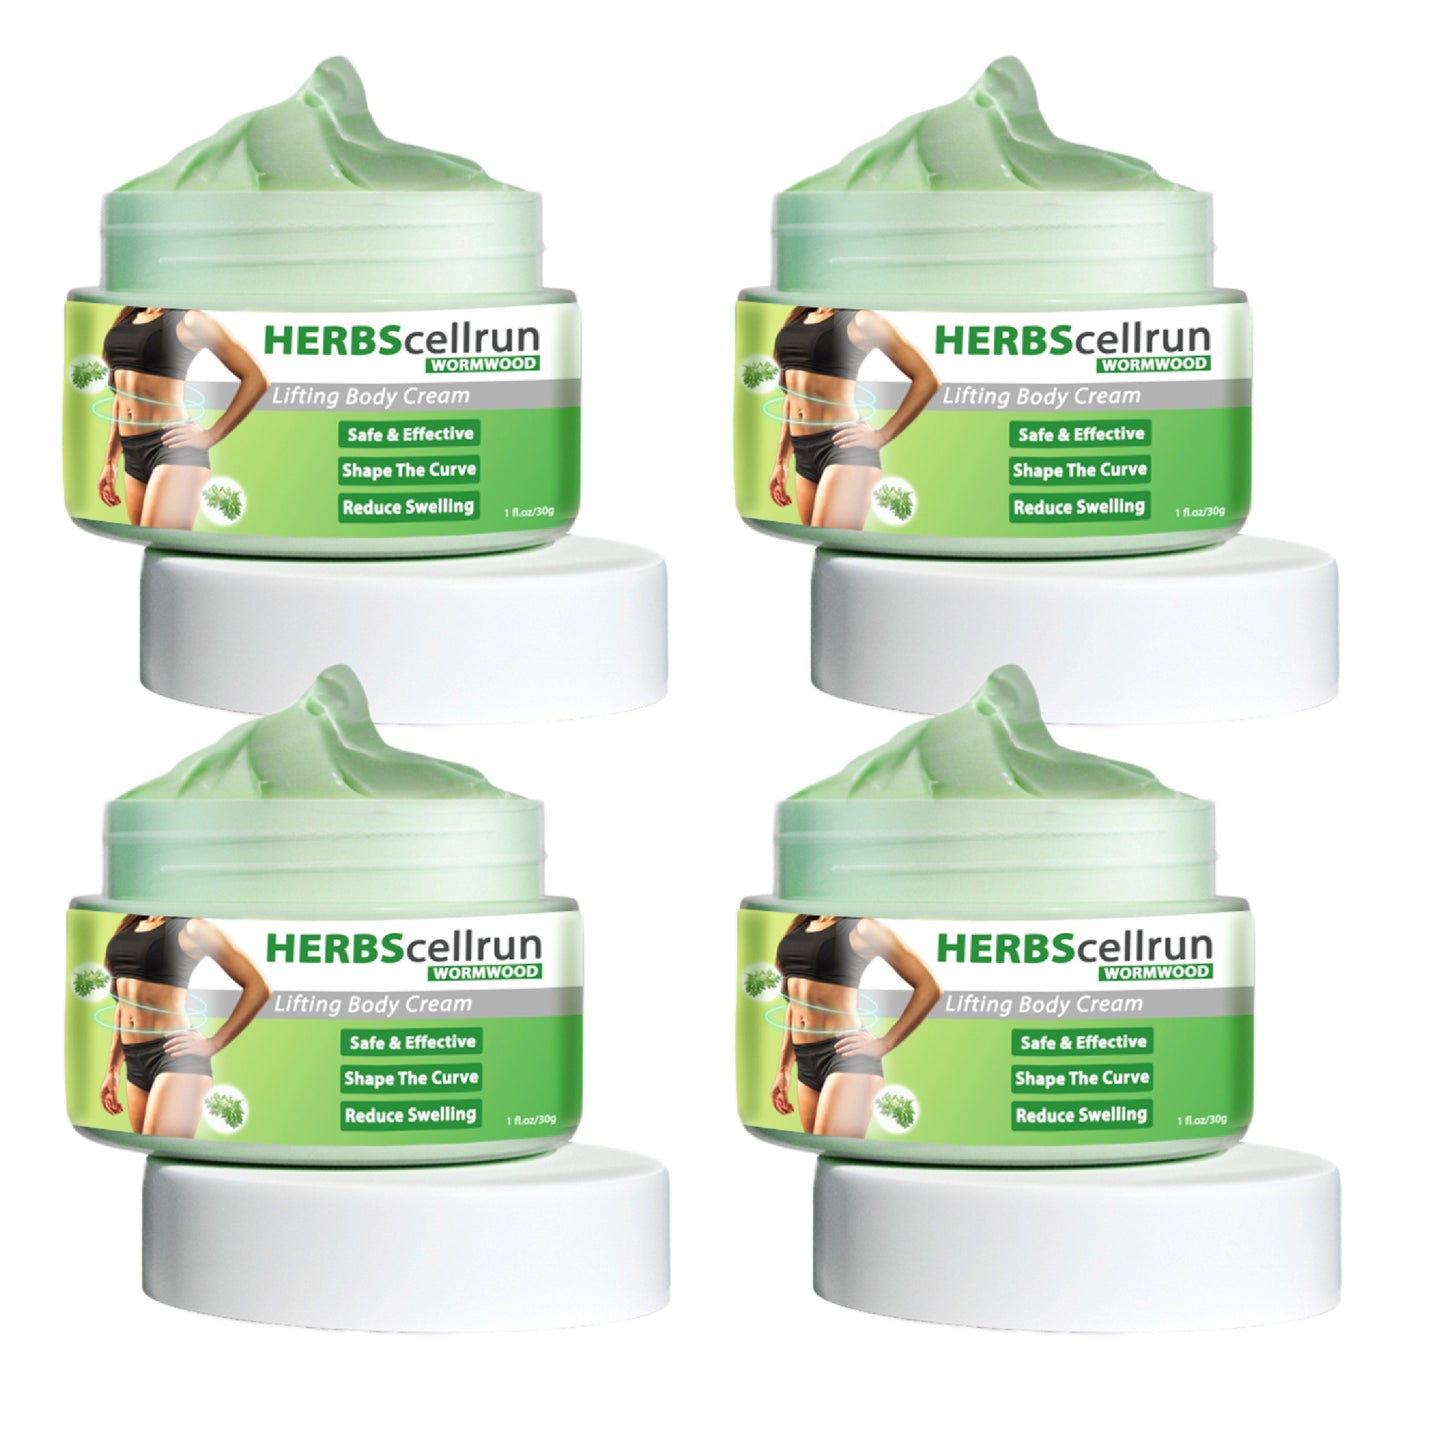 GFOUK™ Herbscellrun Wormwood Lifting Body Cream